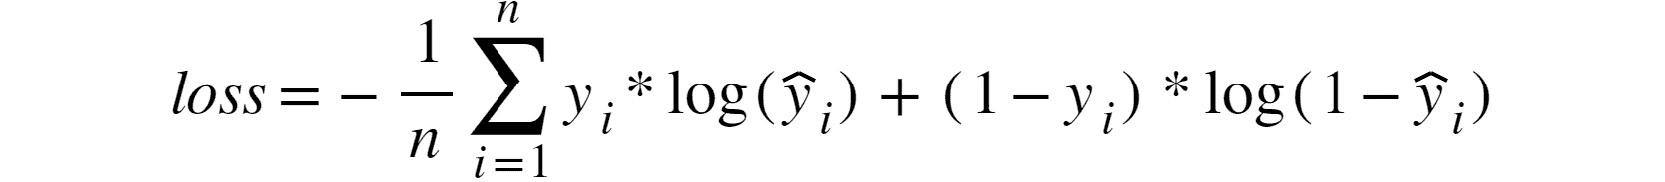 Figure 2.15: Cross-entropy loss function 